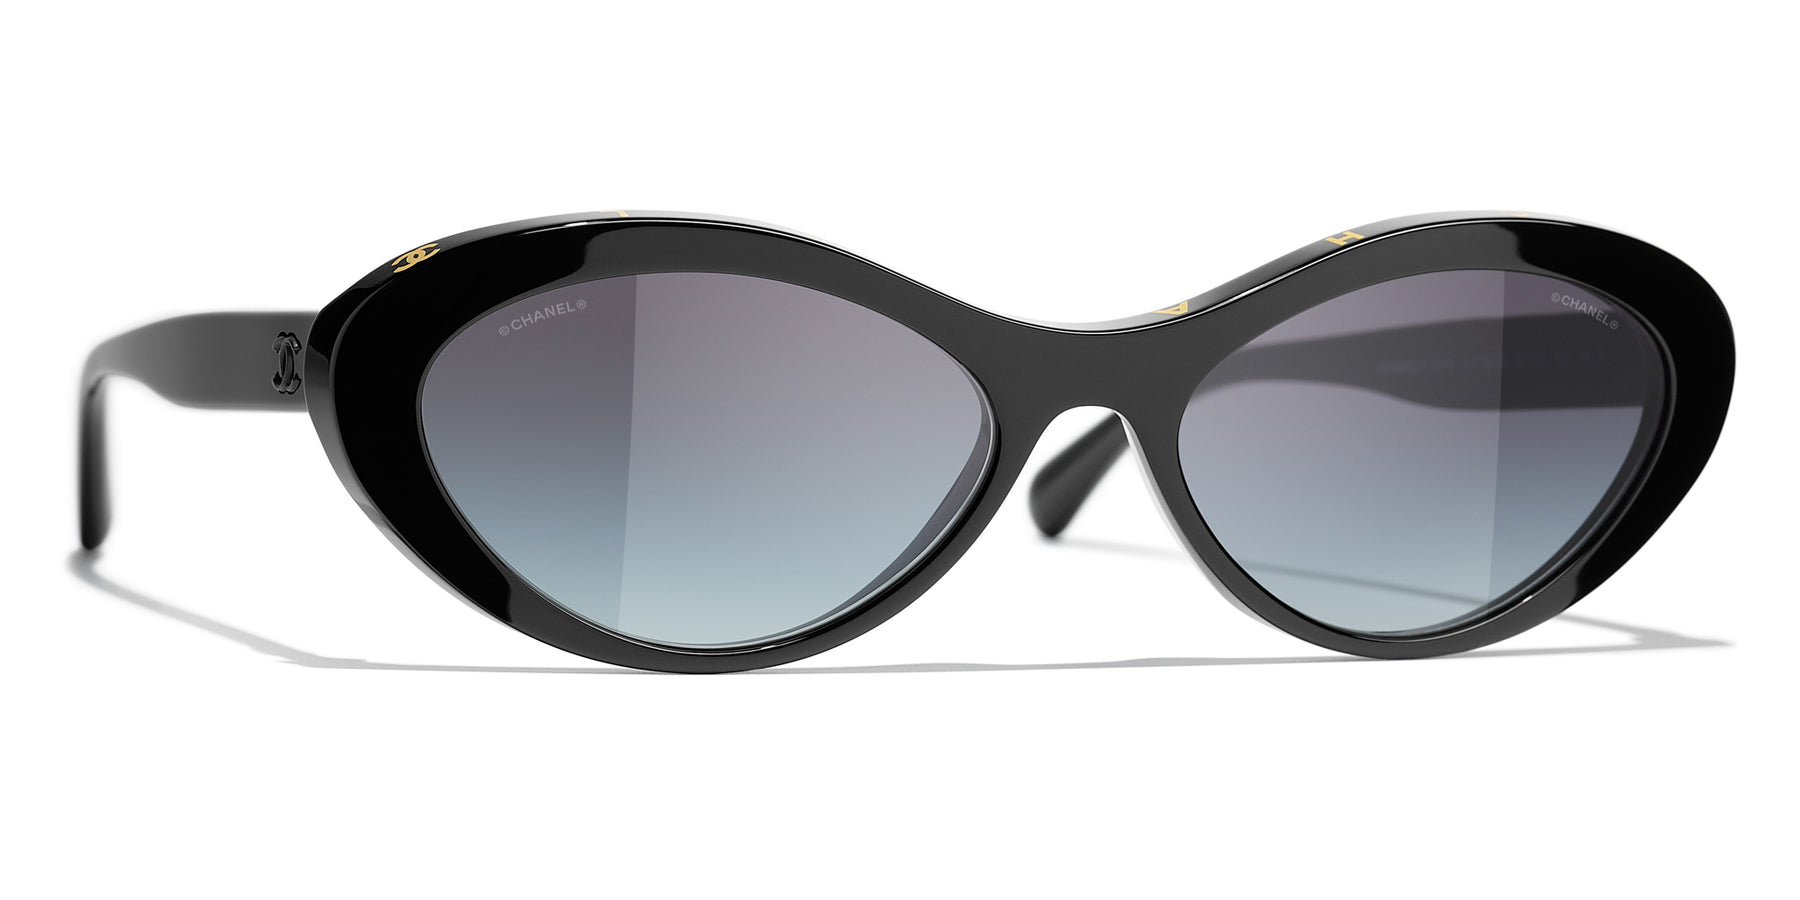 Sunglasses CHANEL CH5486 1659/S6 56-17 Blue in stock, Price 262,50 €